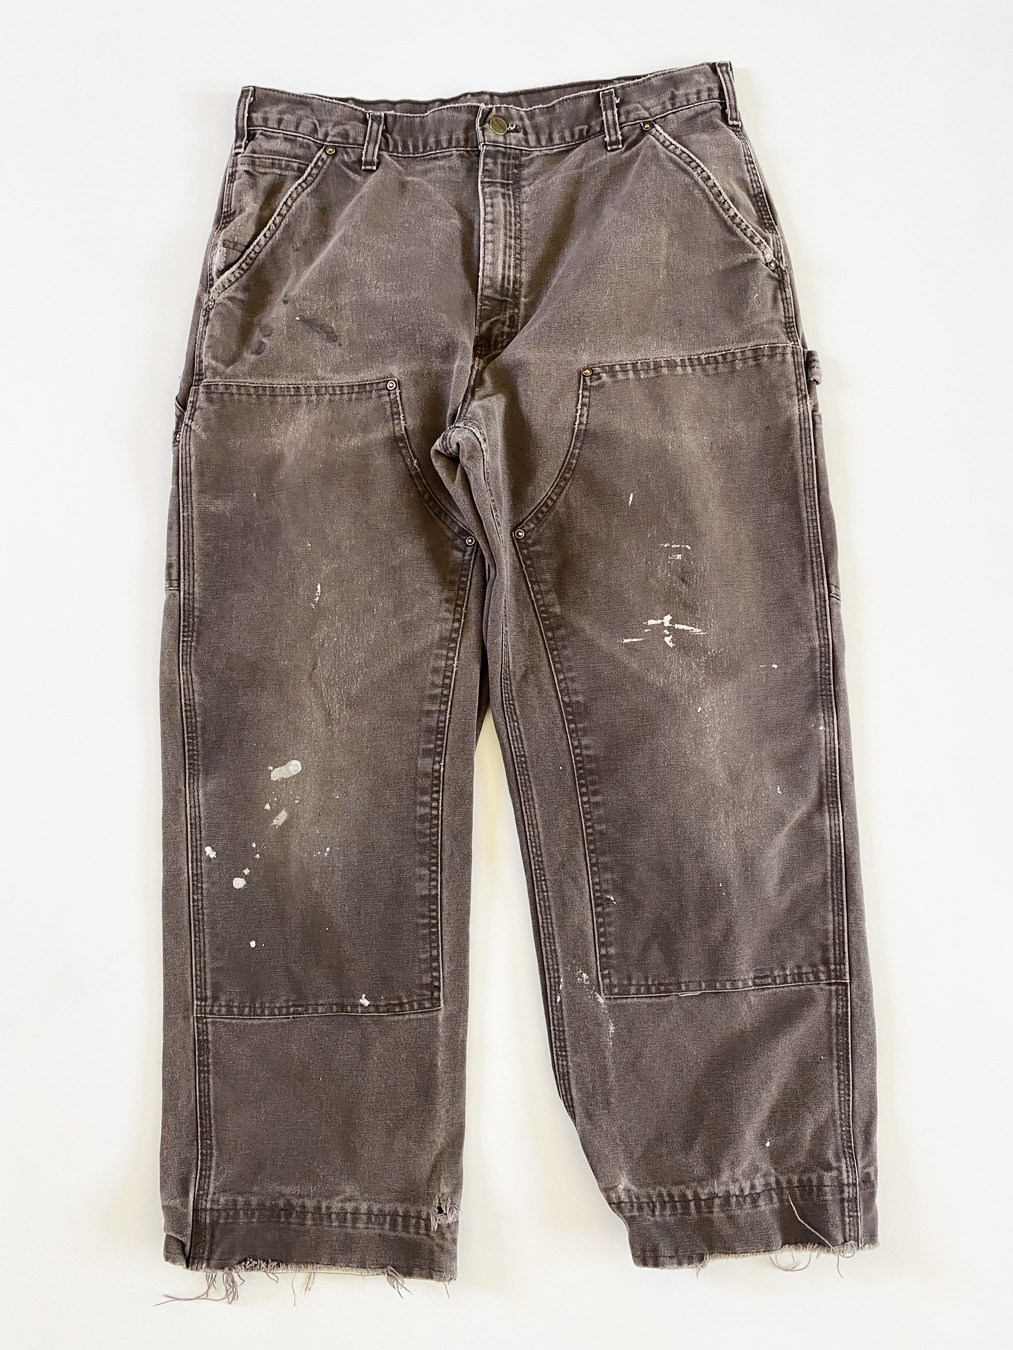 Faded Brown Carhartt Double Knee Pants - 5 Star Vintage